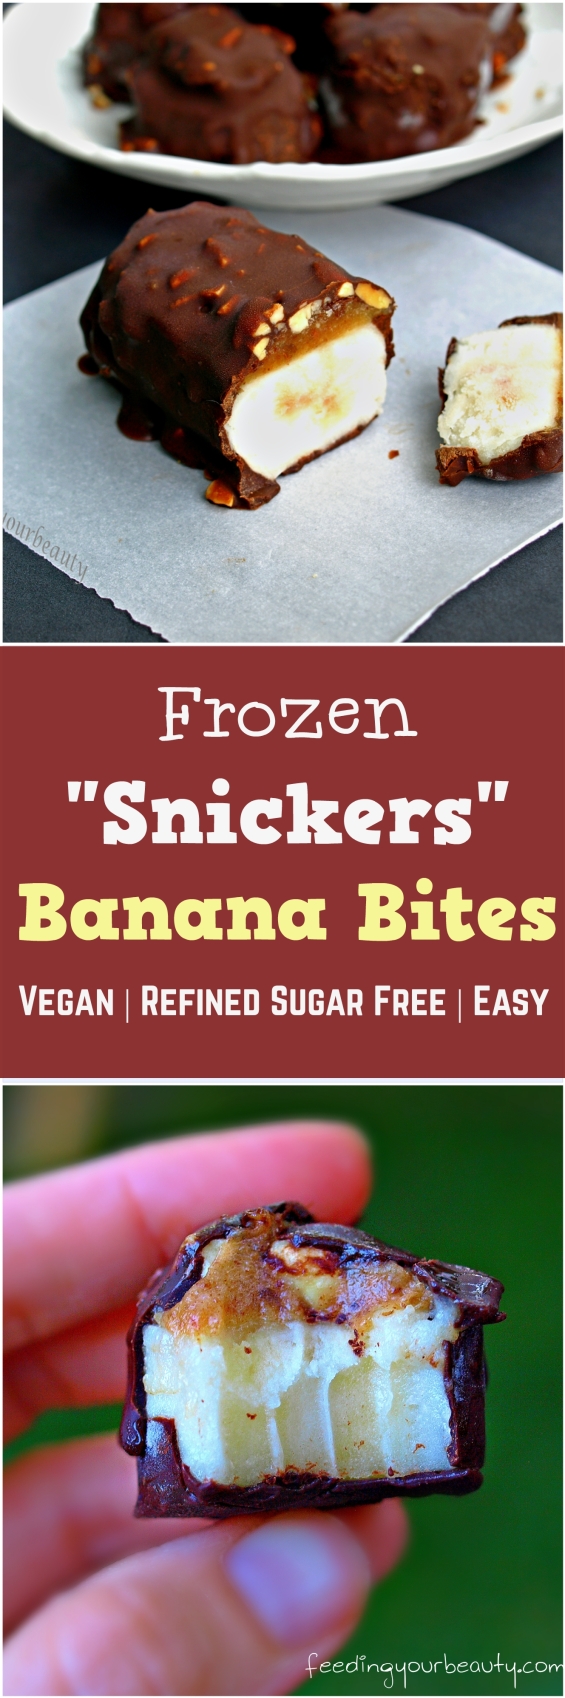 snickers banana bites